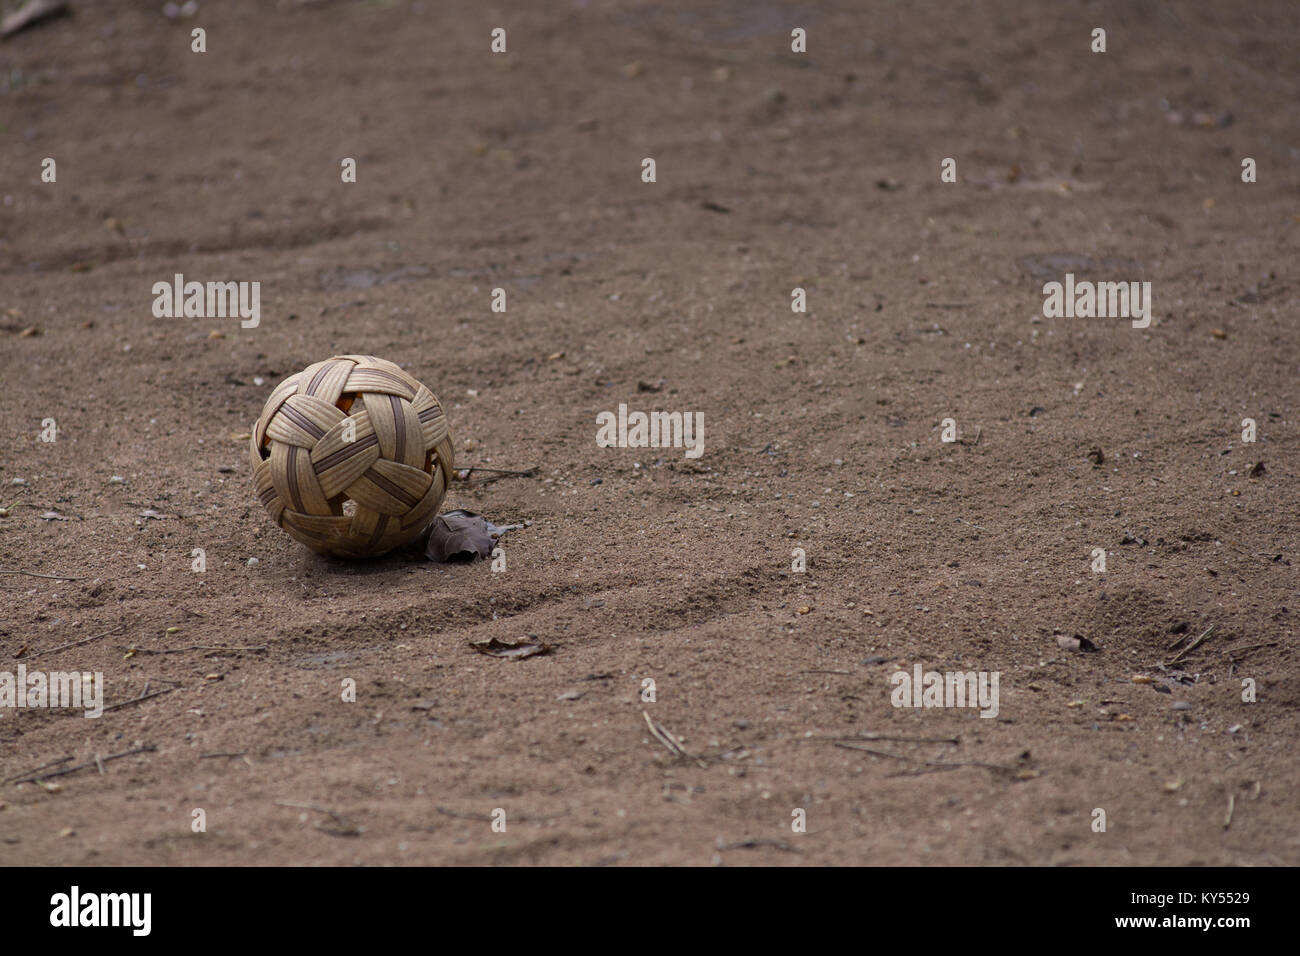 Sepak takraw kick volleyball ball alone on a dry dirt court. Stock Photo